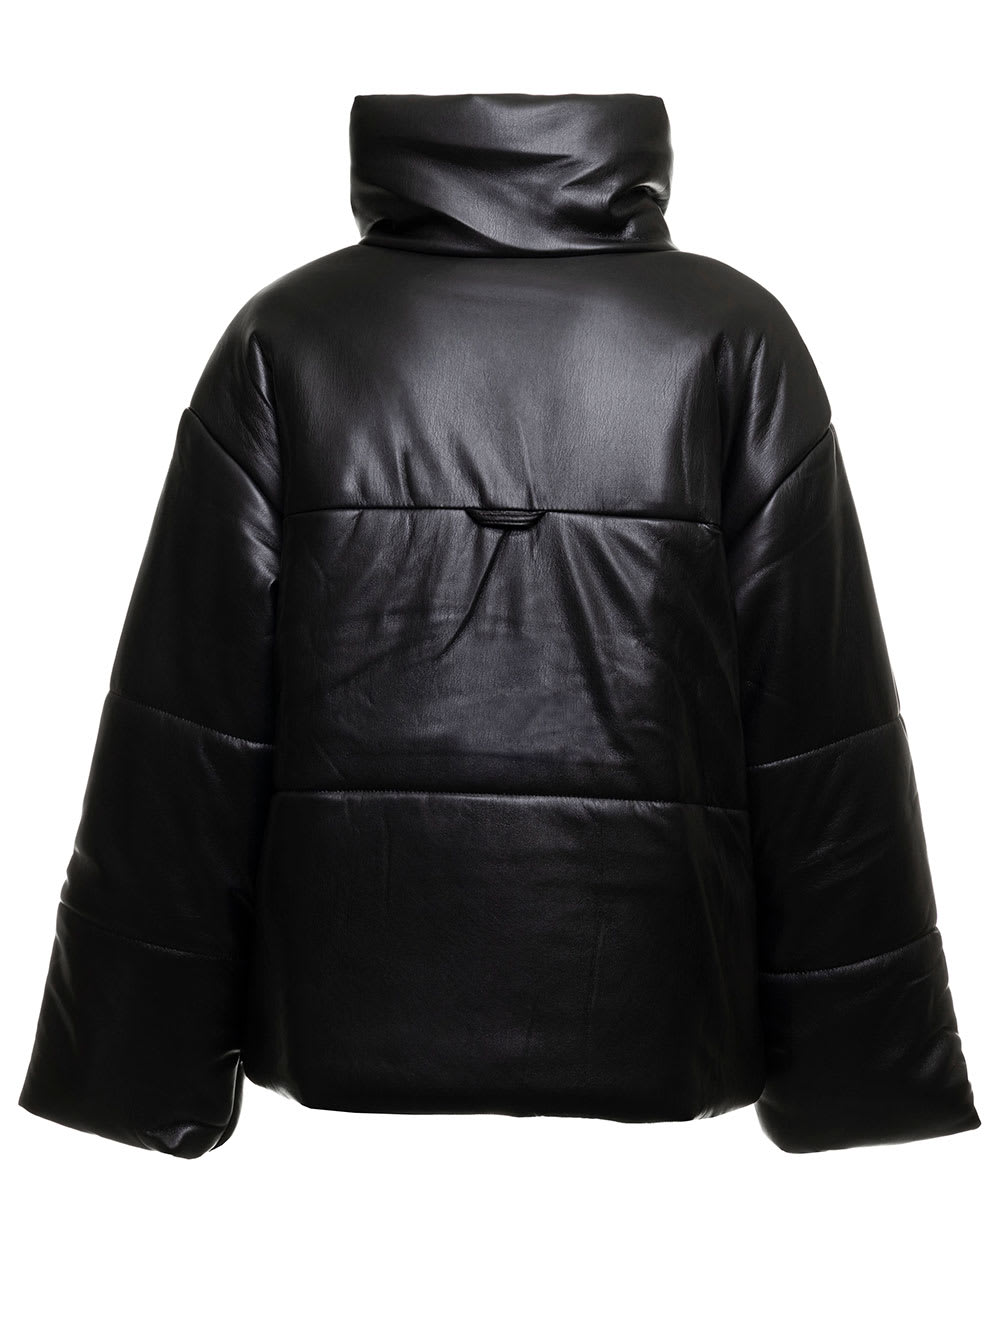 Shop Nanushka Black Vegan Leather Quilted Jacket Nanuskha Woman